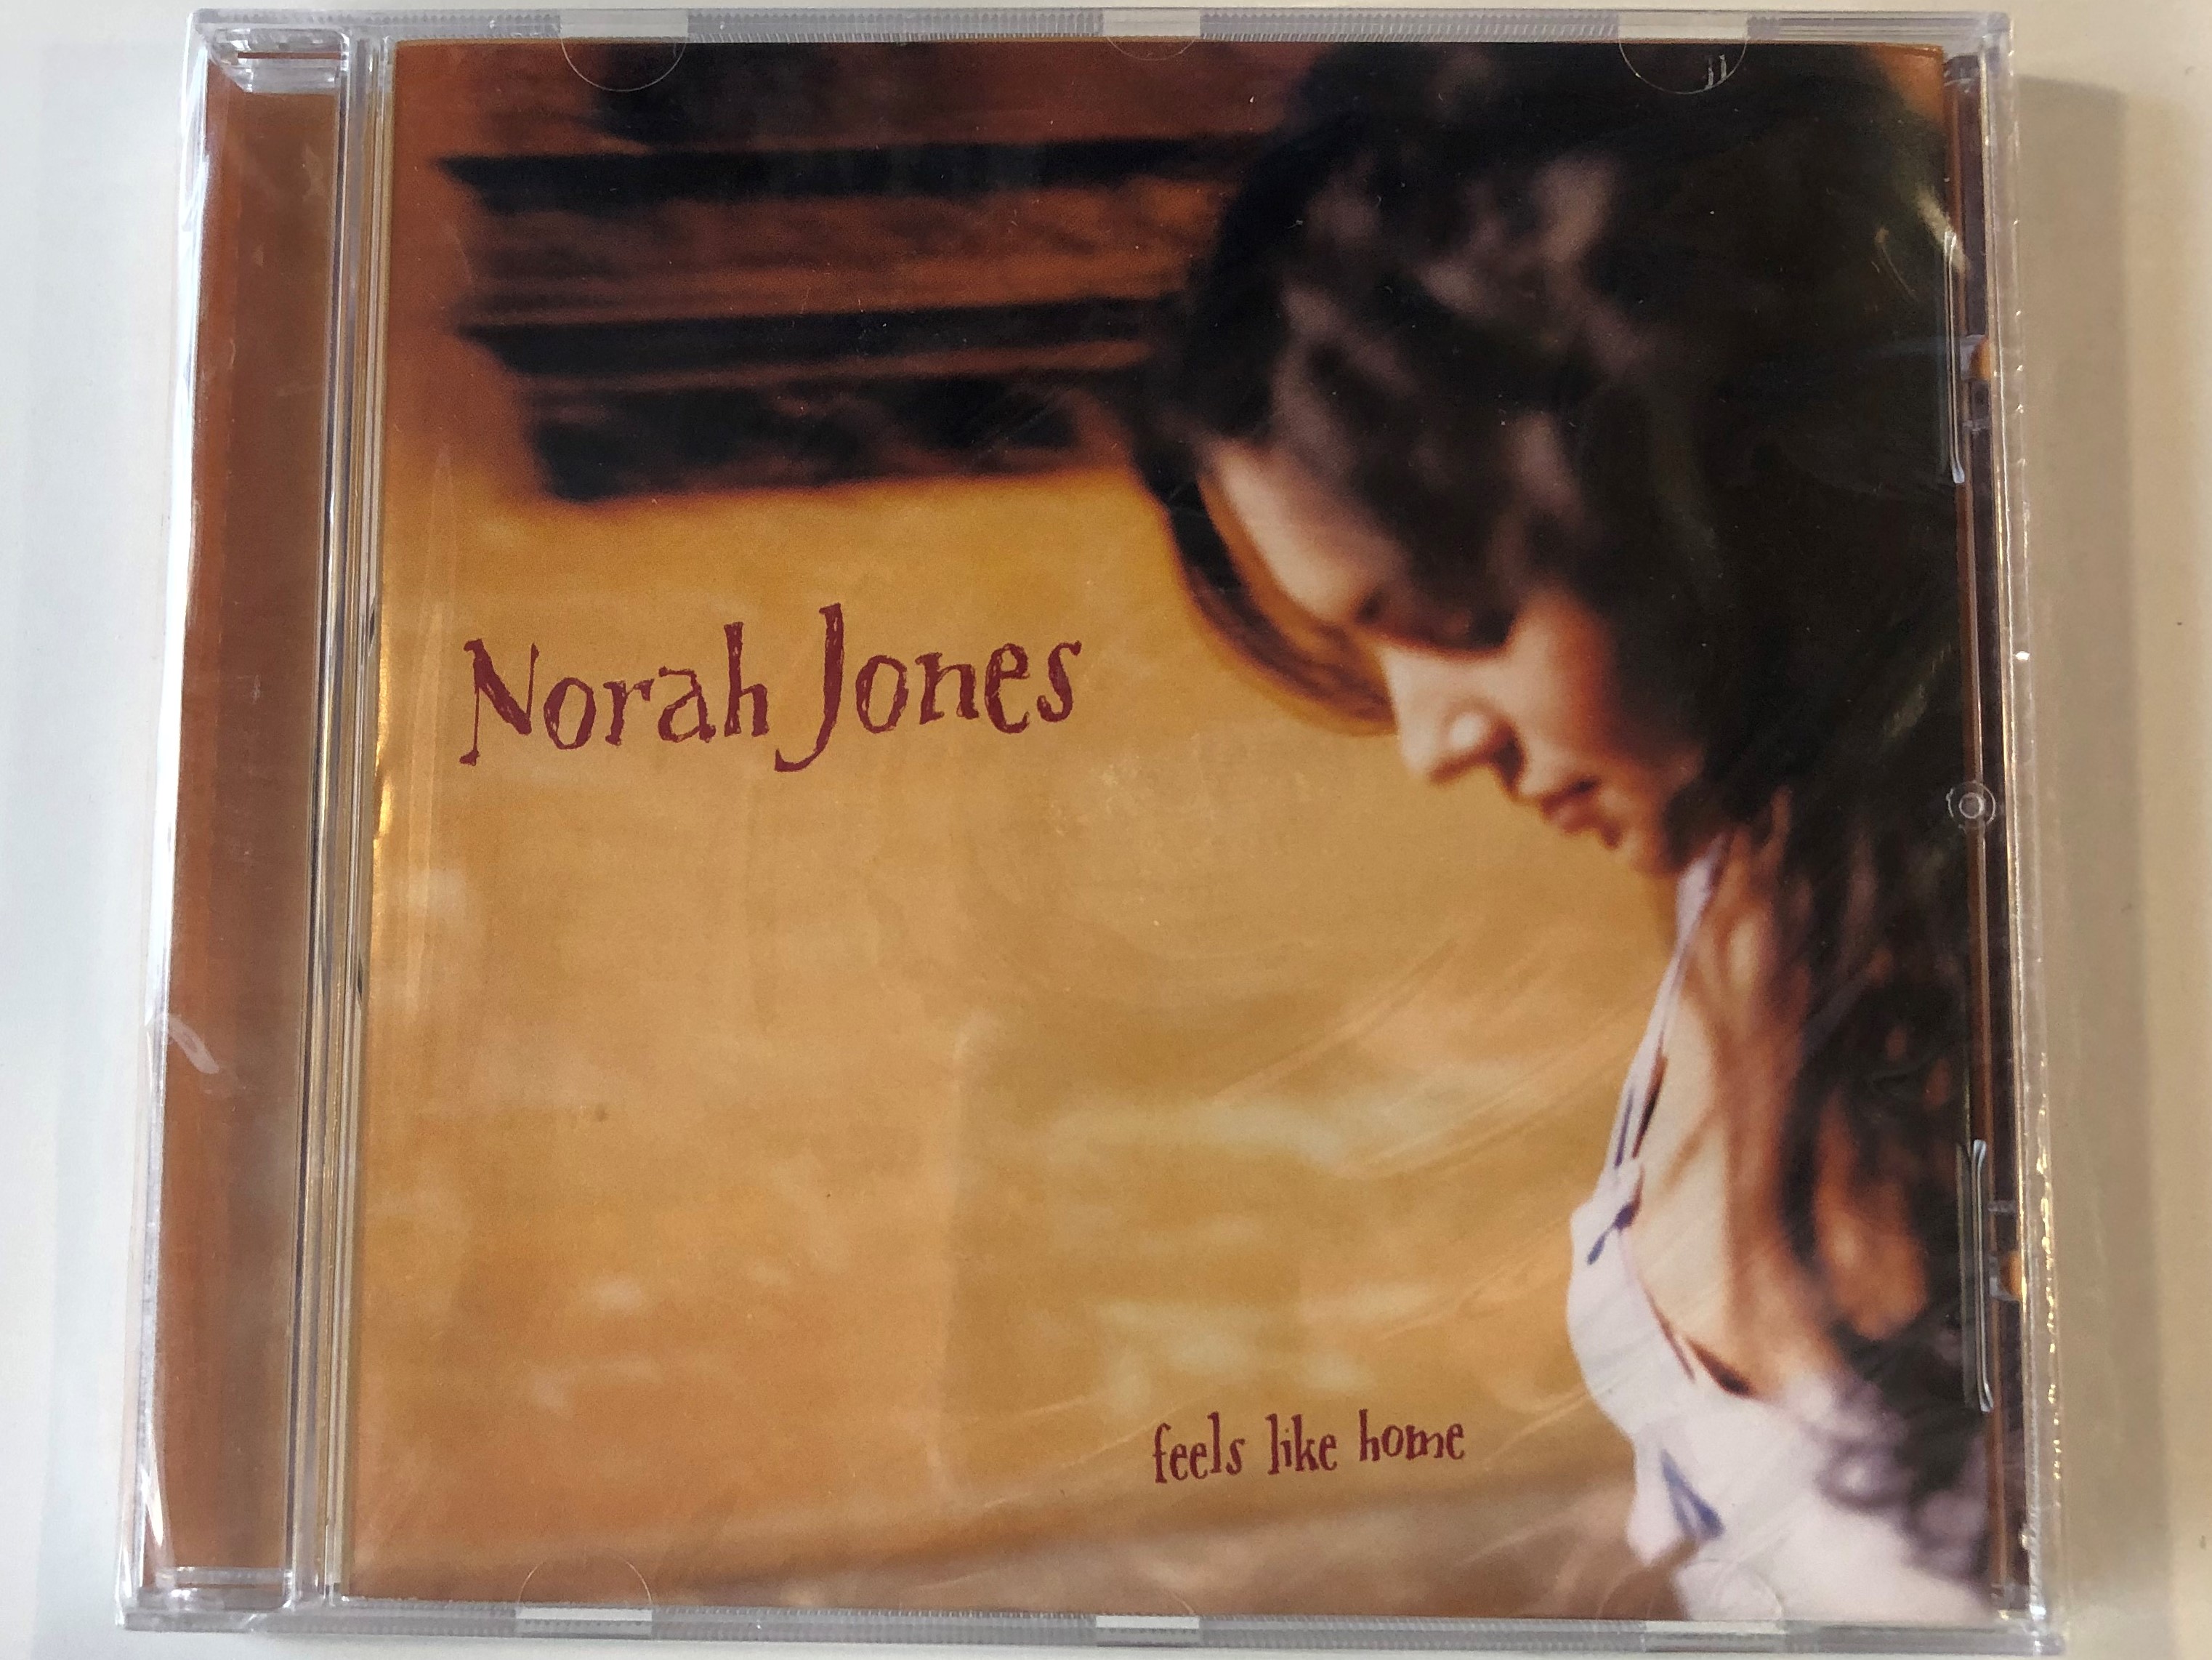 norah-jones-feels-like-home-blue-note-audio-cd-2004-724359836607-1-.jpg